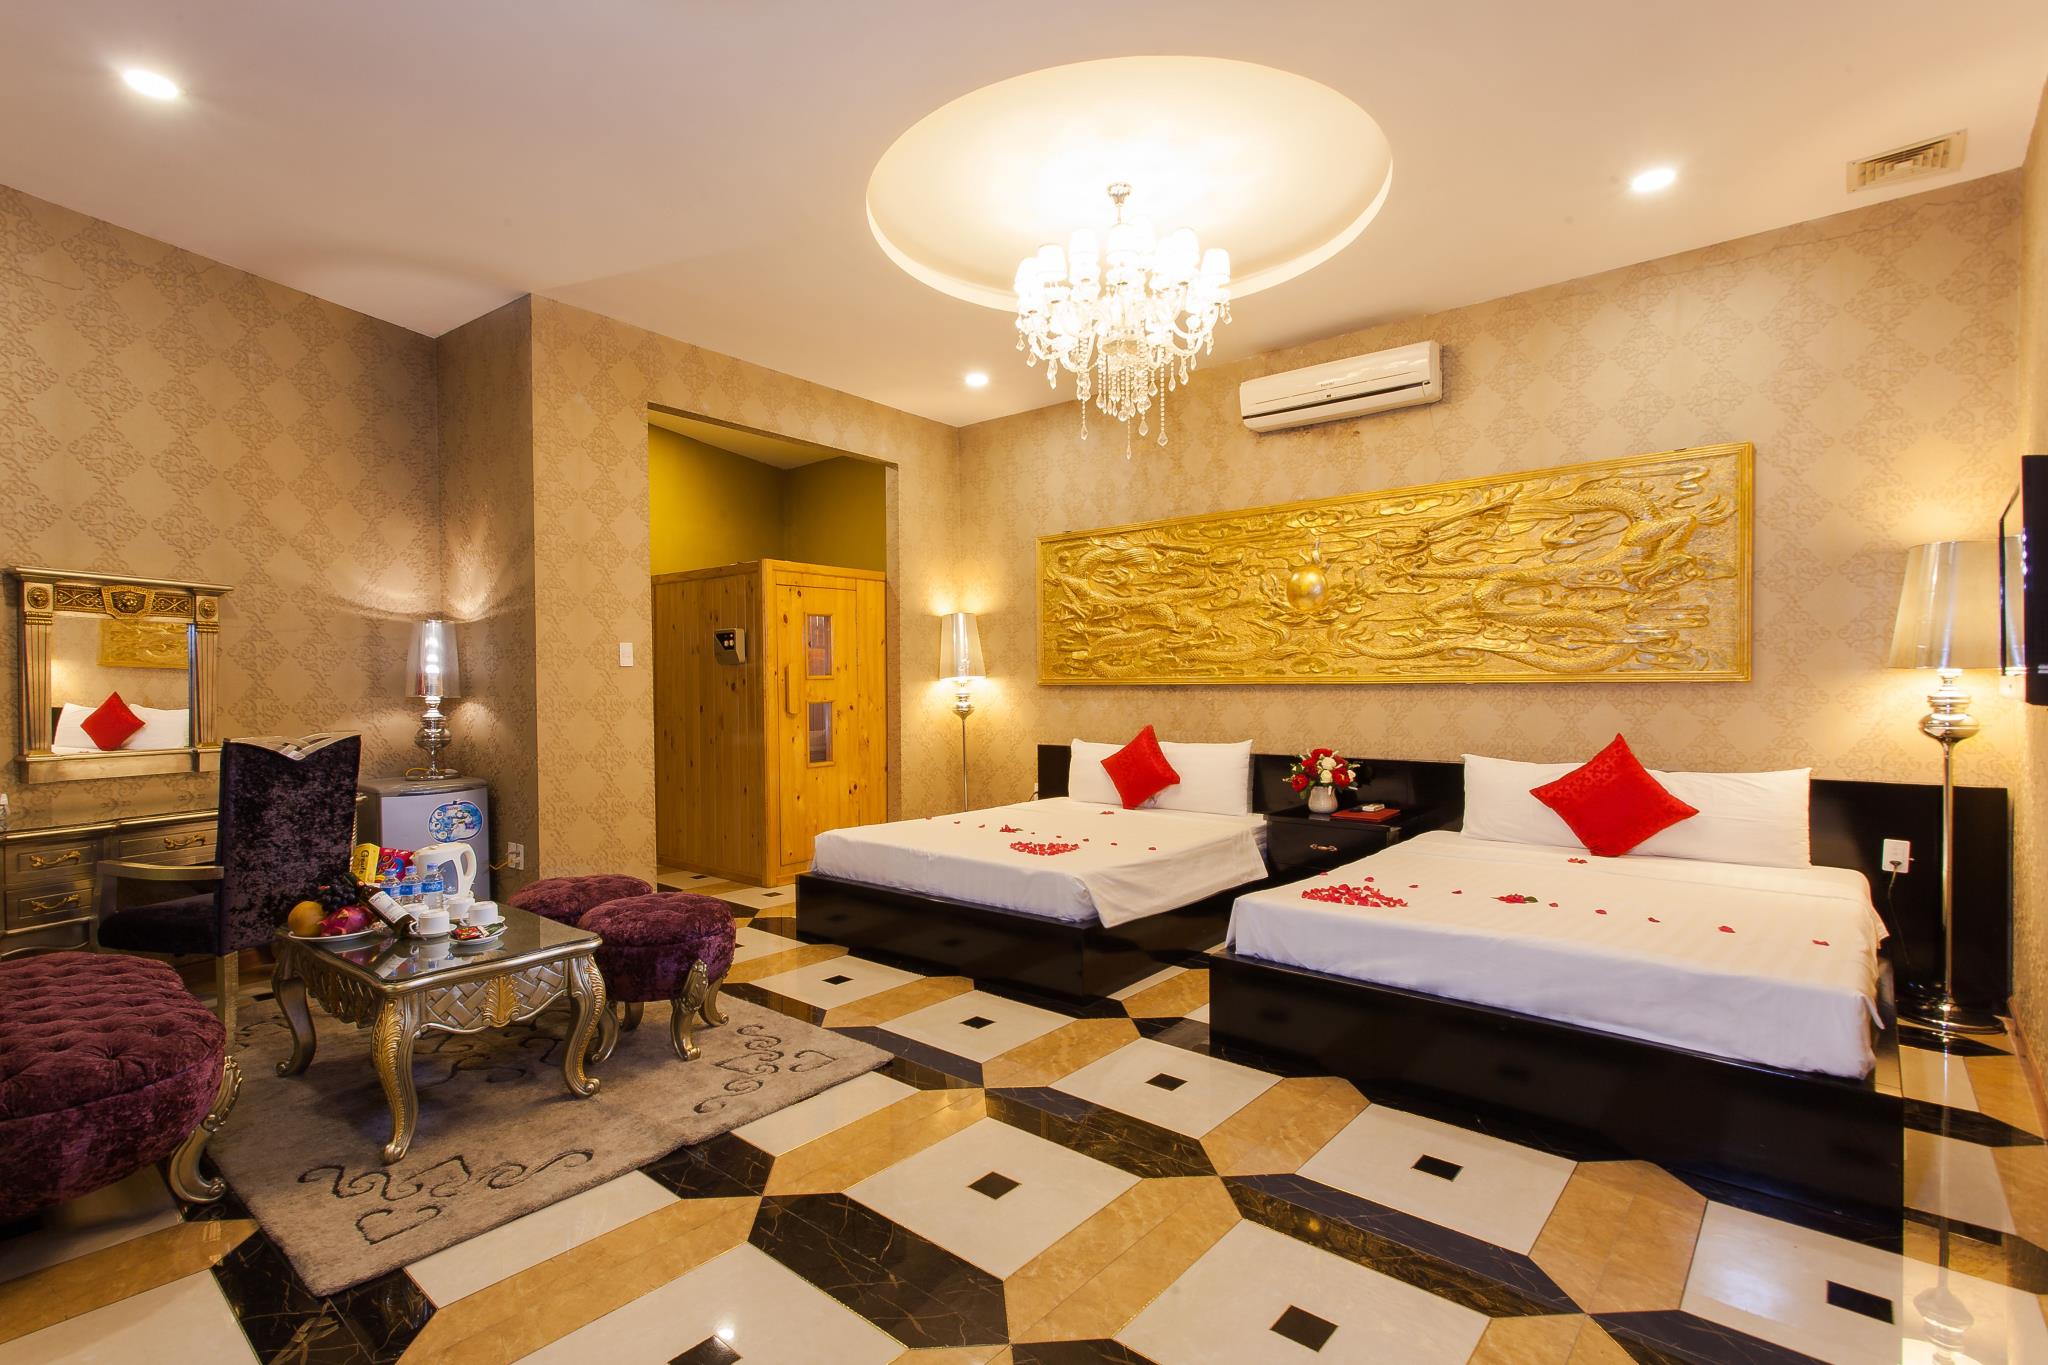 Helios Legend Hotel - best hotels in hanoi old quarter